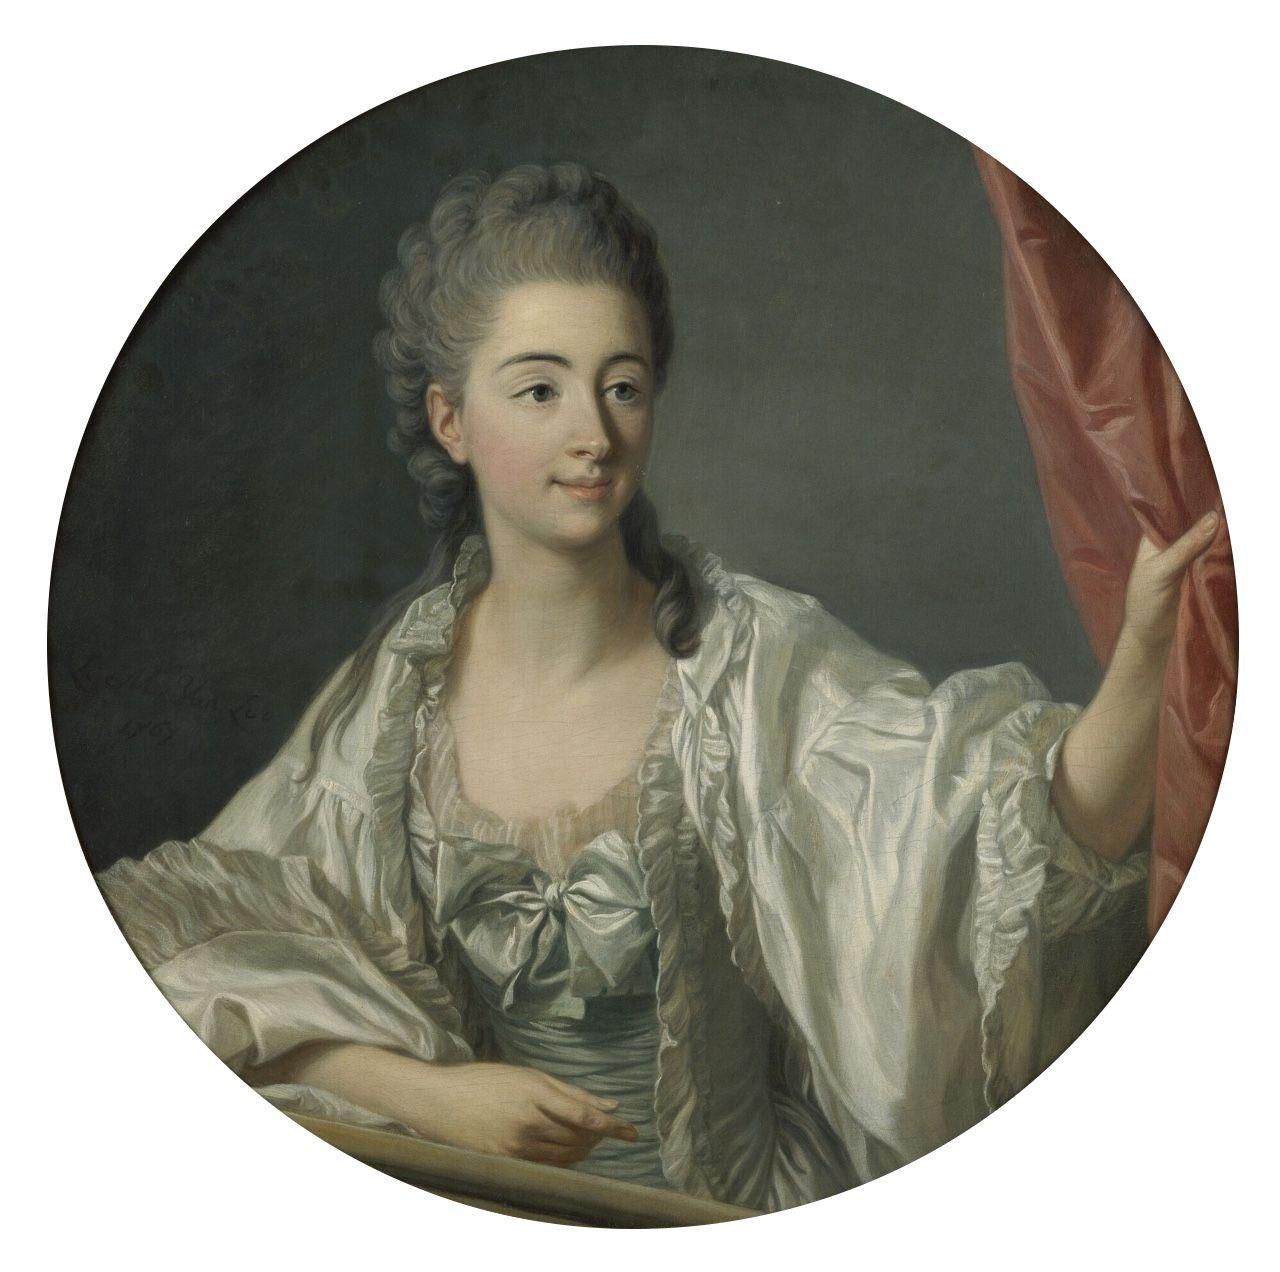 Laure-Augute de Fitz-James, Princess of Chimay